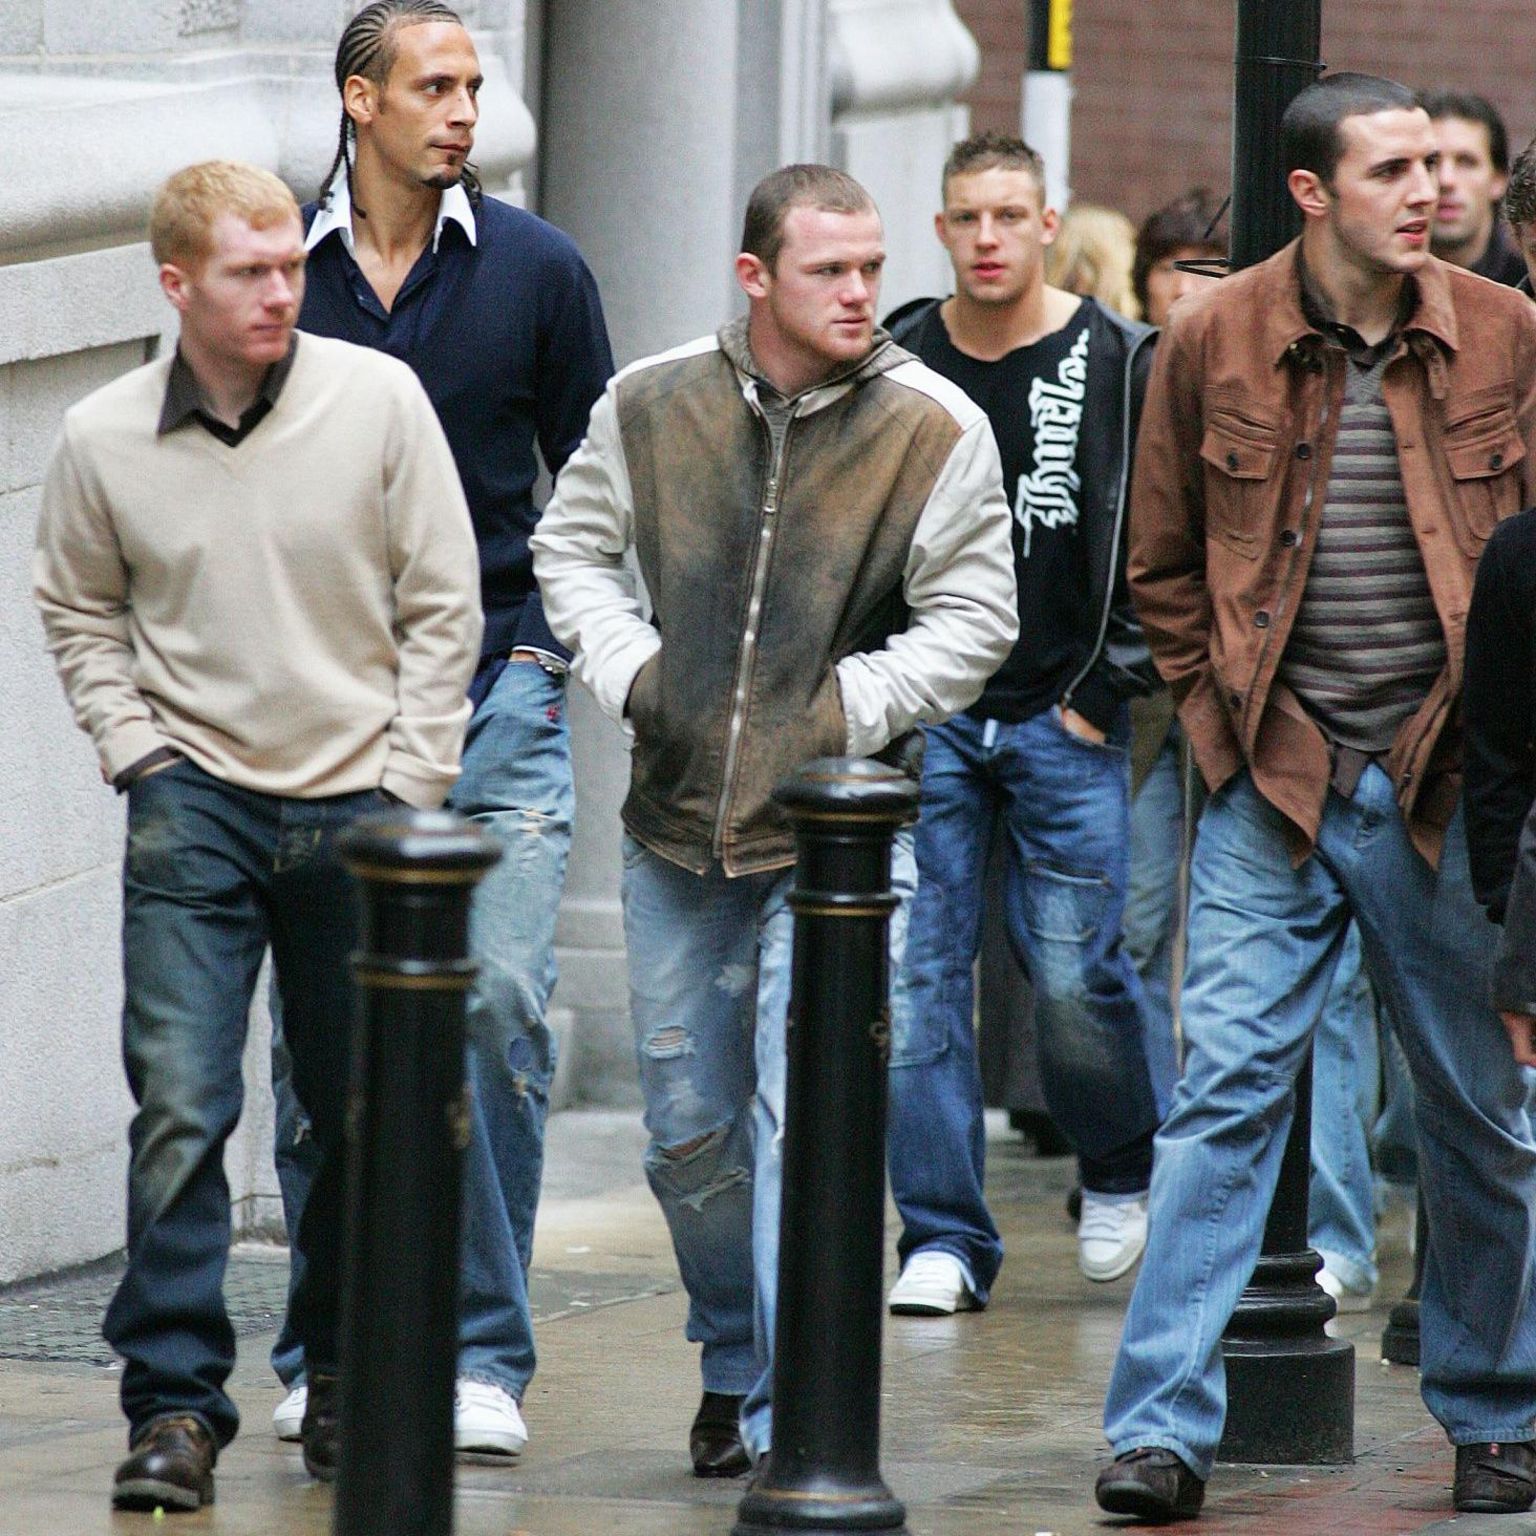 Paul Scholes, Wayne Rooney, John O'Shea and Alan Smith walk through Manchester